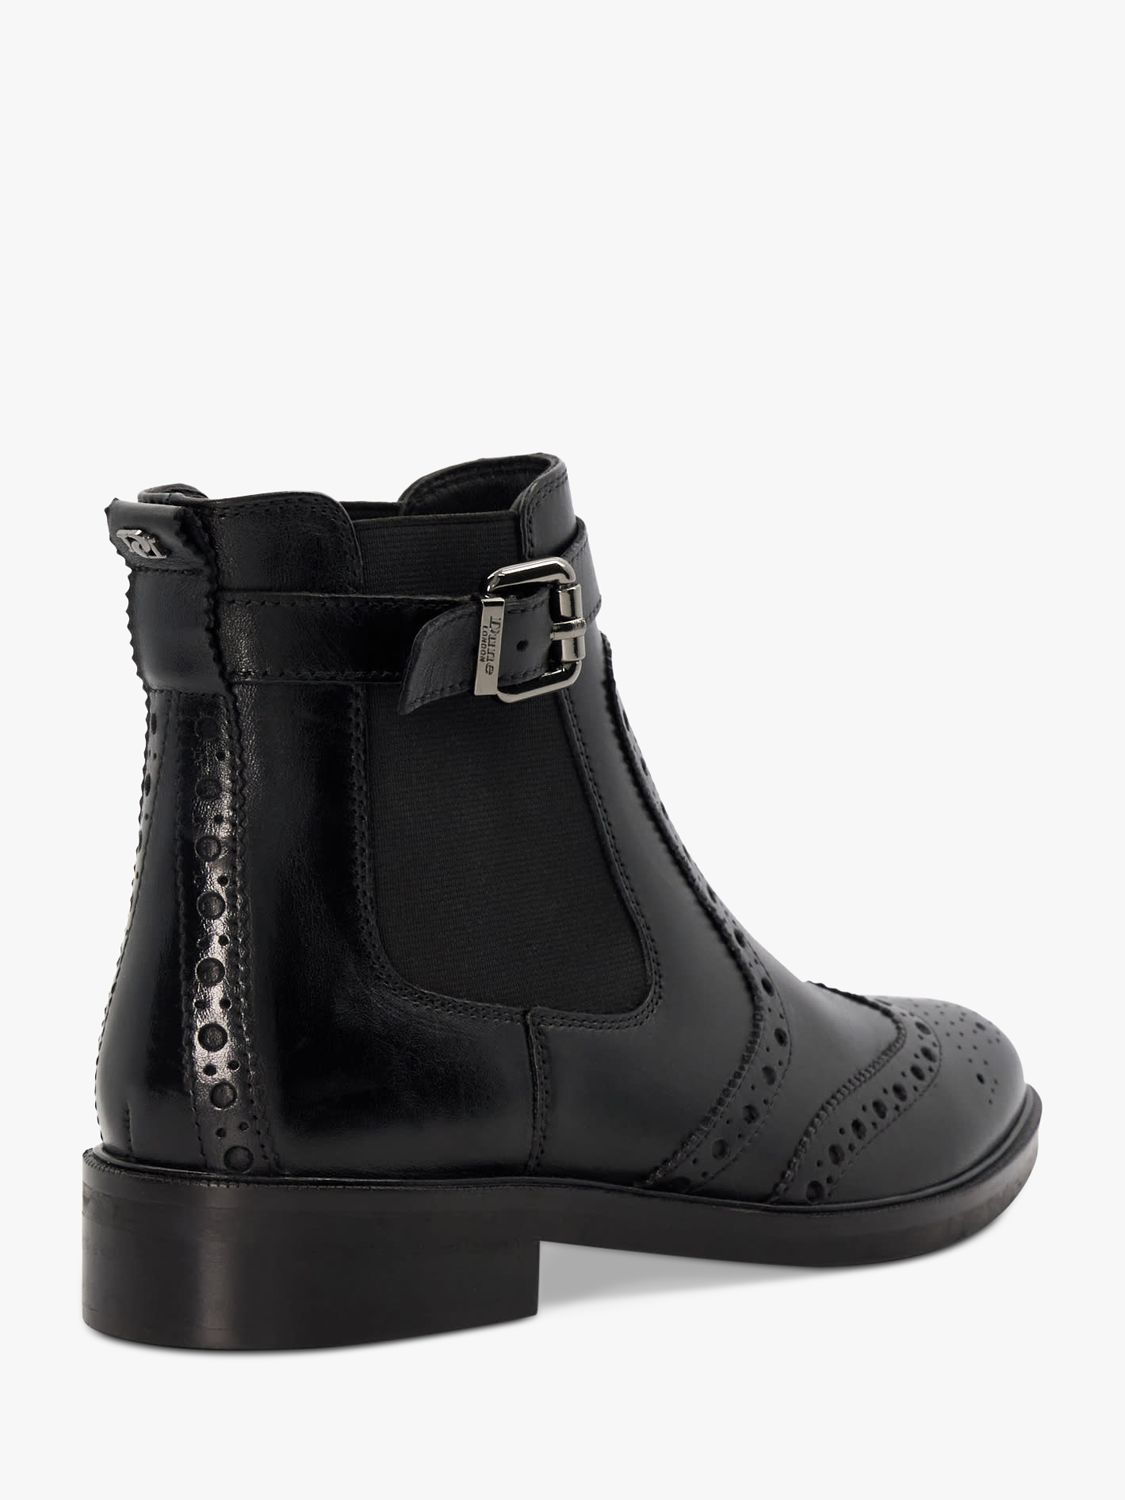 Dune Question Leather Buckle Ankle Boots, Black, EU36